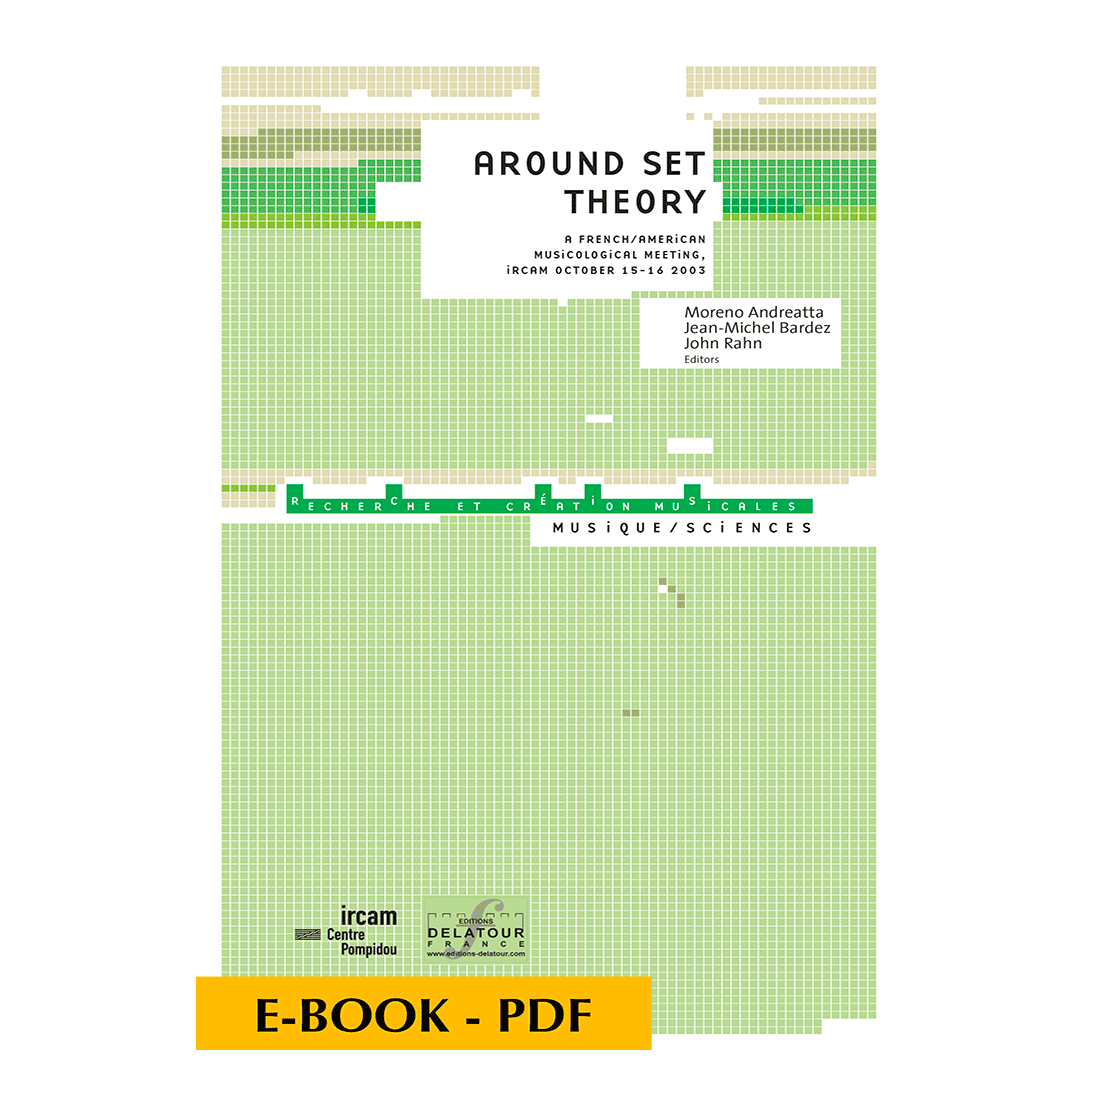 Around set theory - E-book PDF